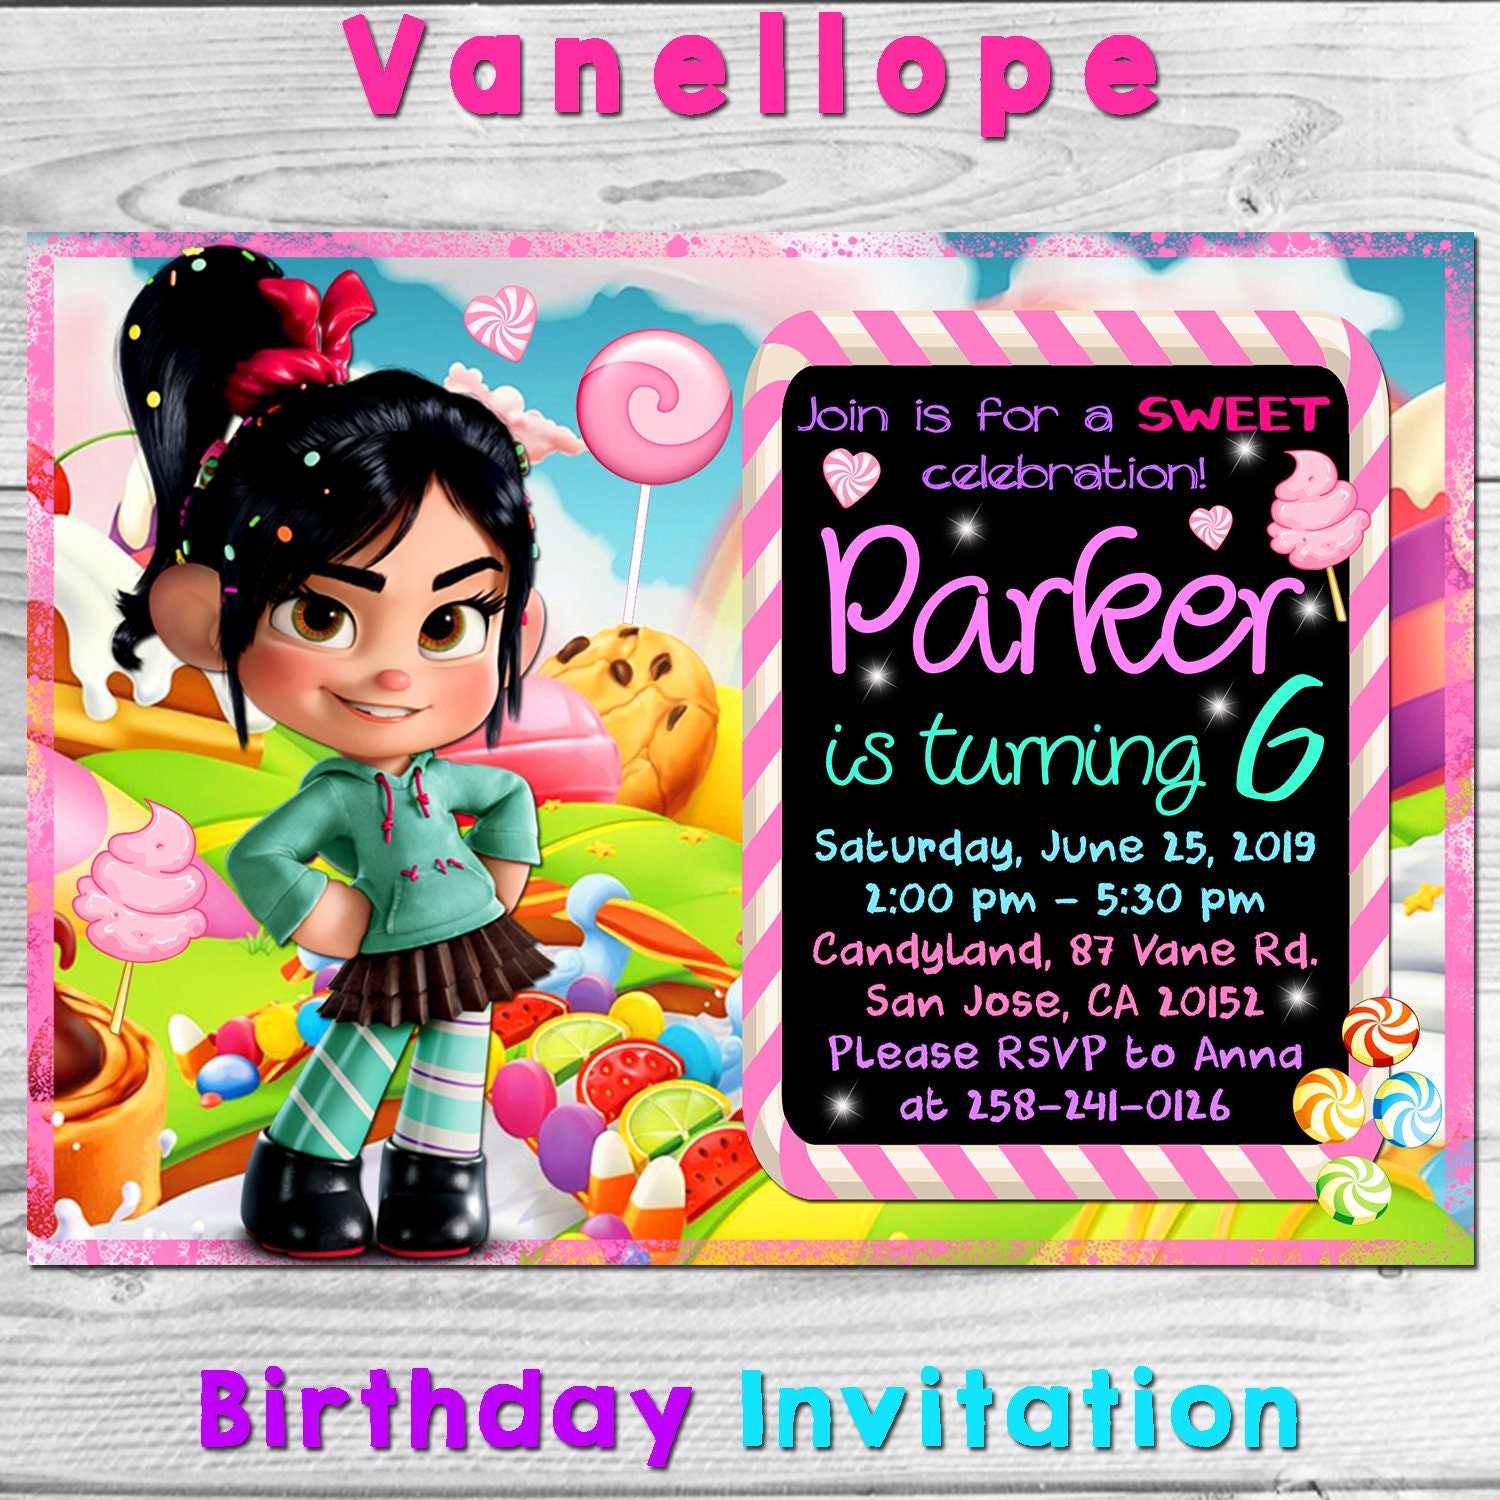 Vanellope Invitation Wreck It Ralph Party Vanellope Birthday Xxx Pic Hd